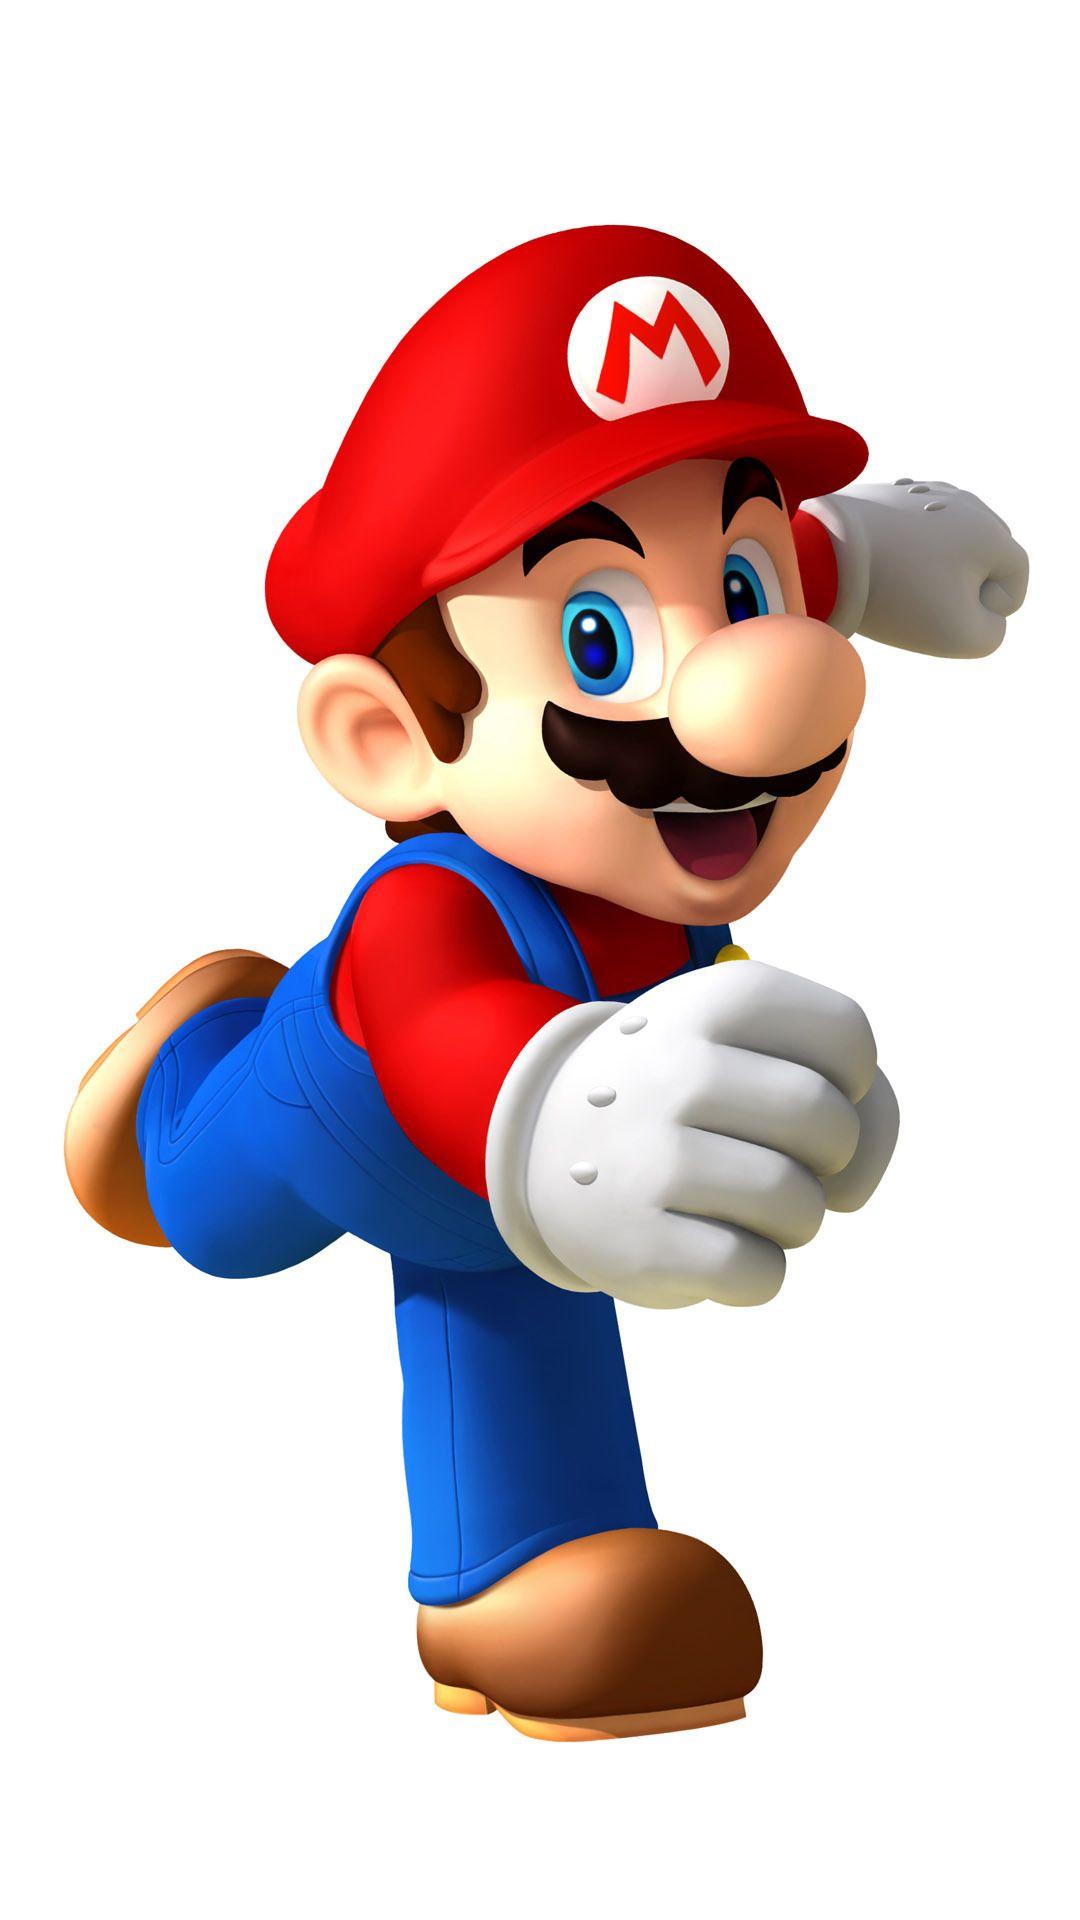 Super Mario Run Wallpapers - Top Free Super Mario Run Backgrounds ...